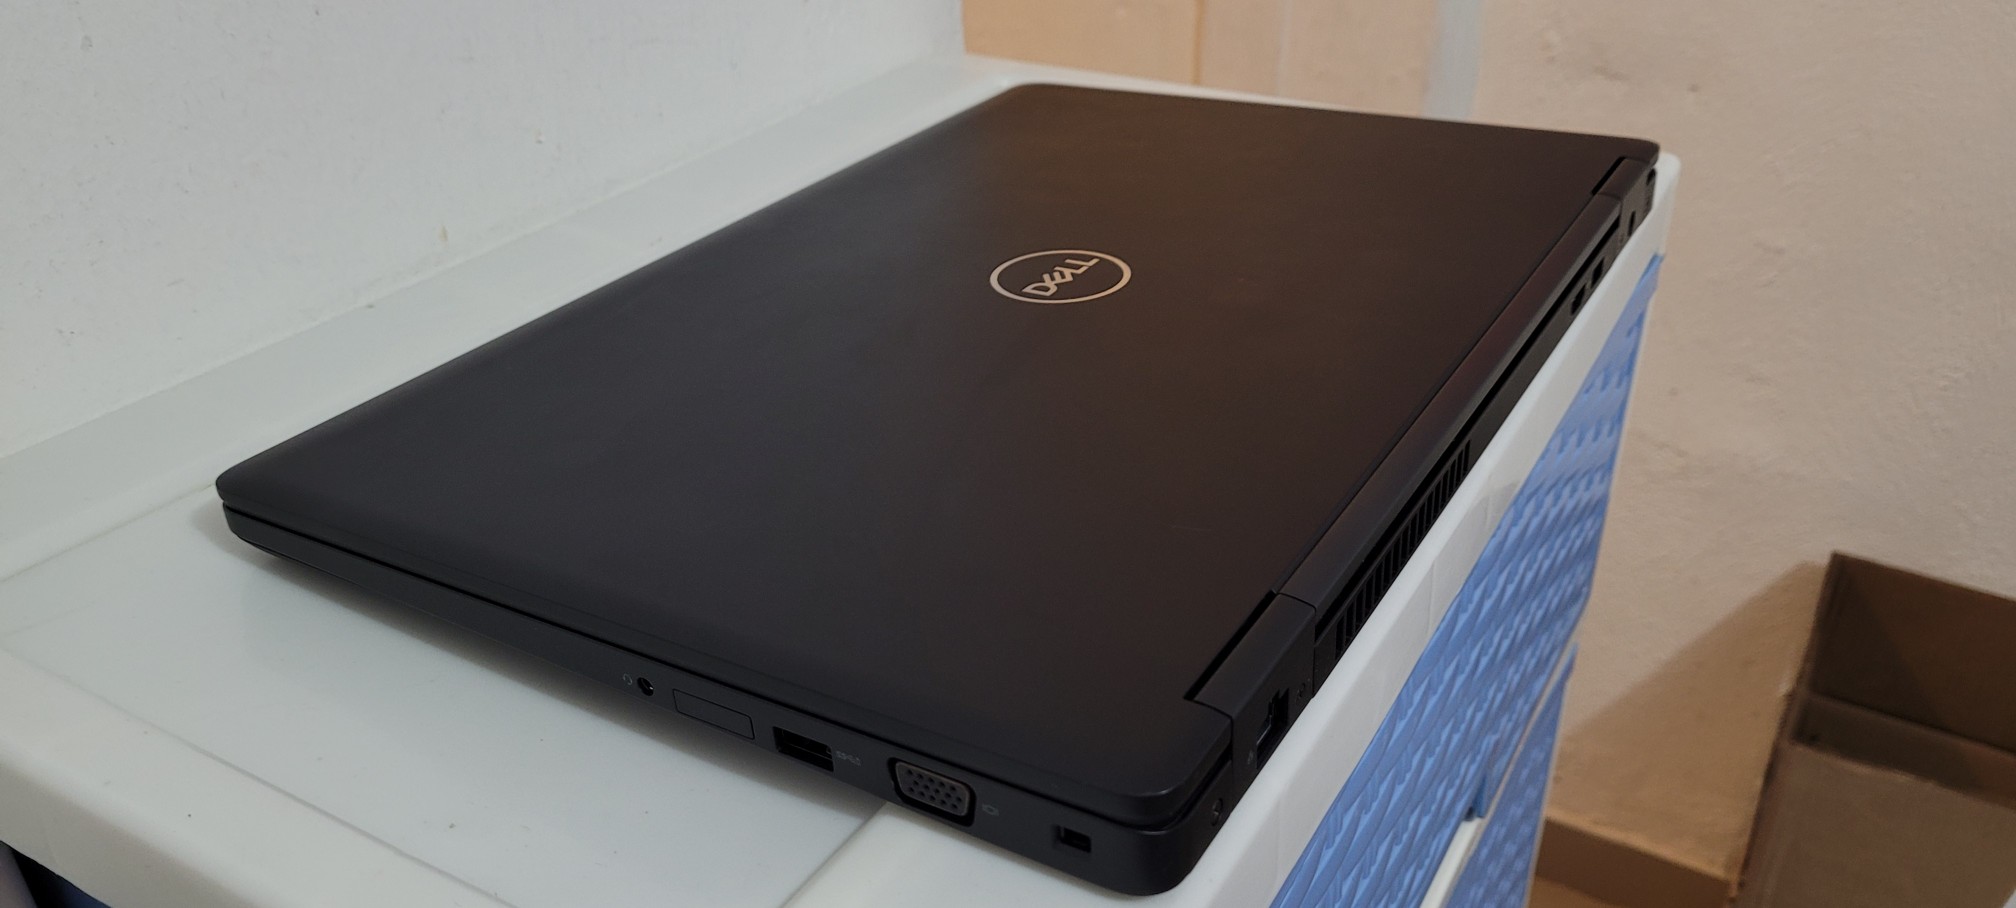 computadoras y laptops - Dell 5590 17 Pulg Core i7 8va Gen Ram 16gb ddr4 Disco m2 512gb SSD Solido 2